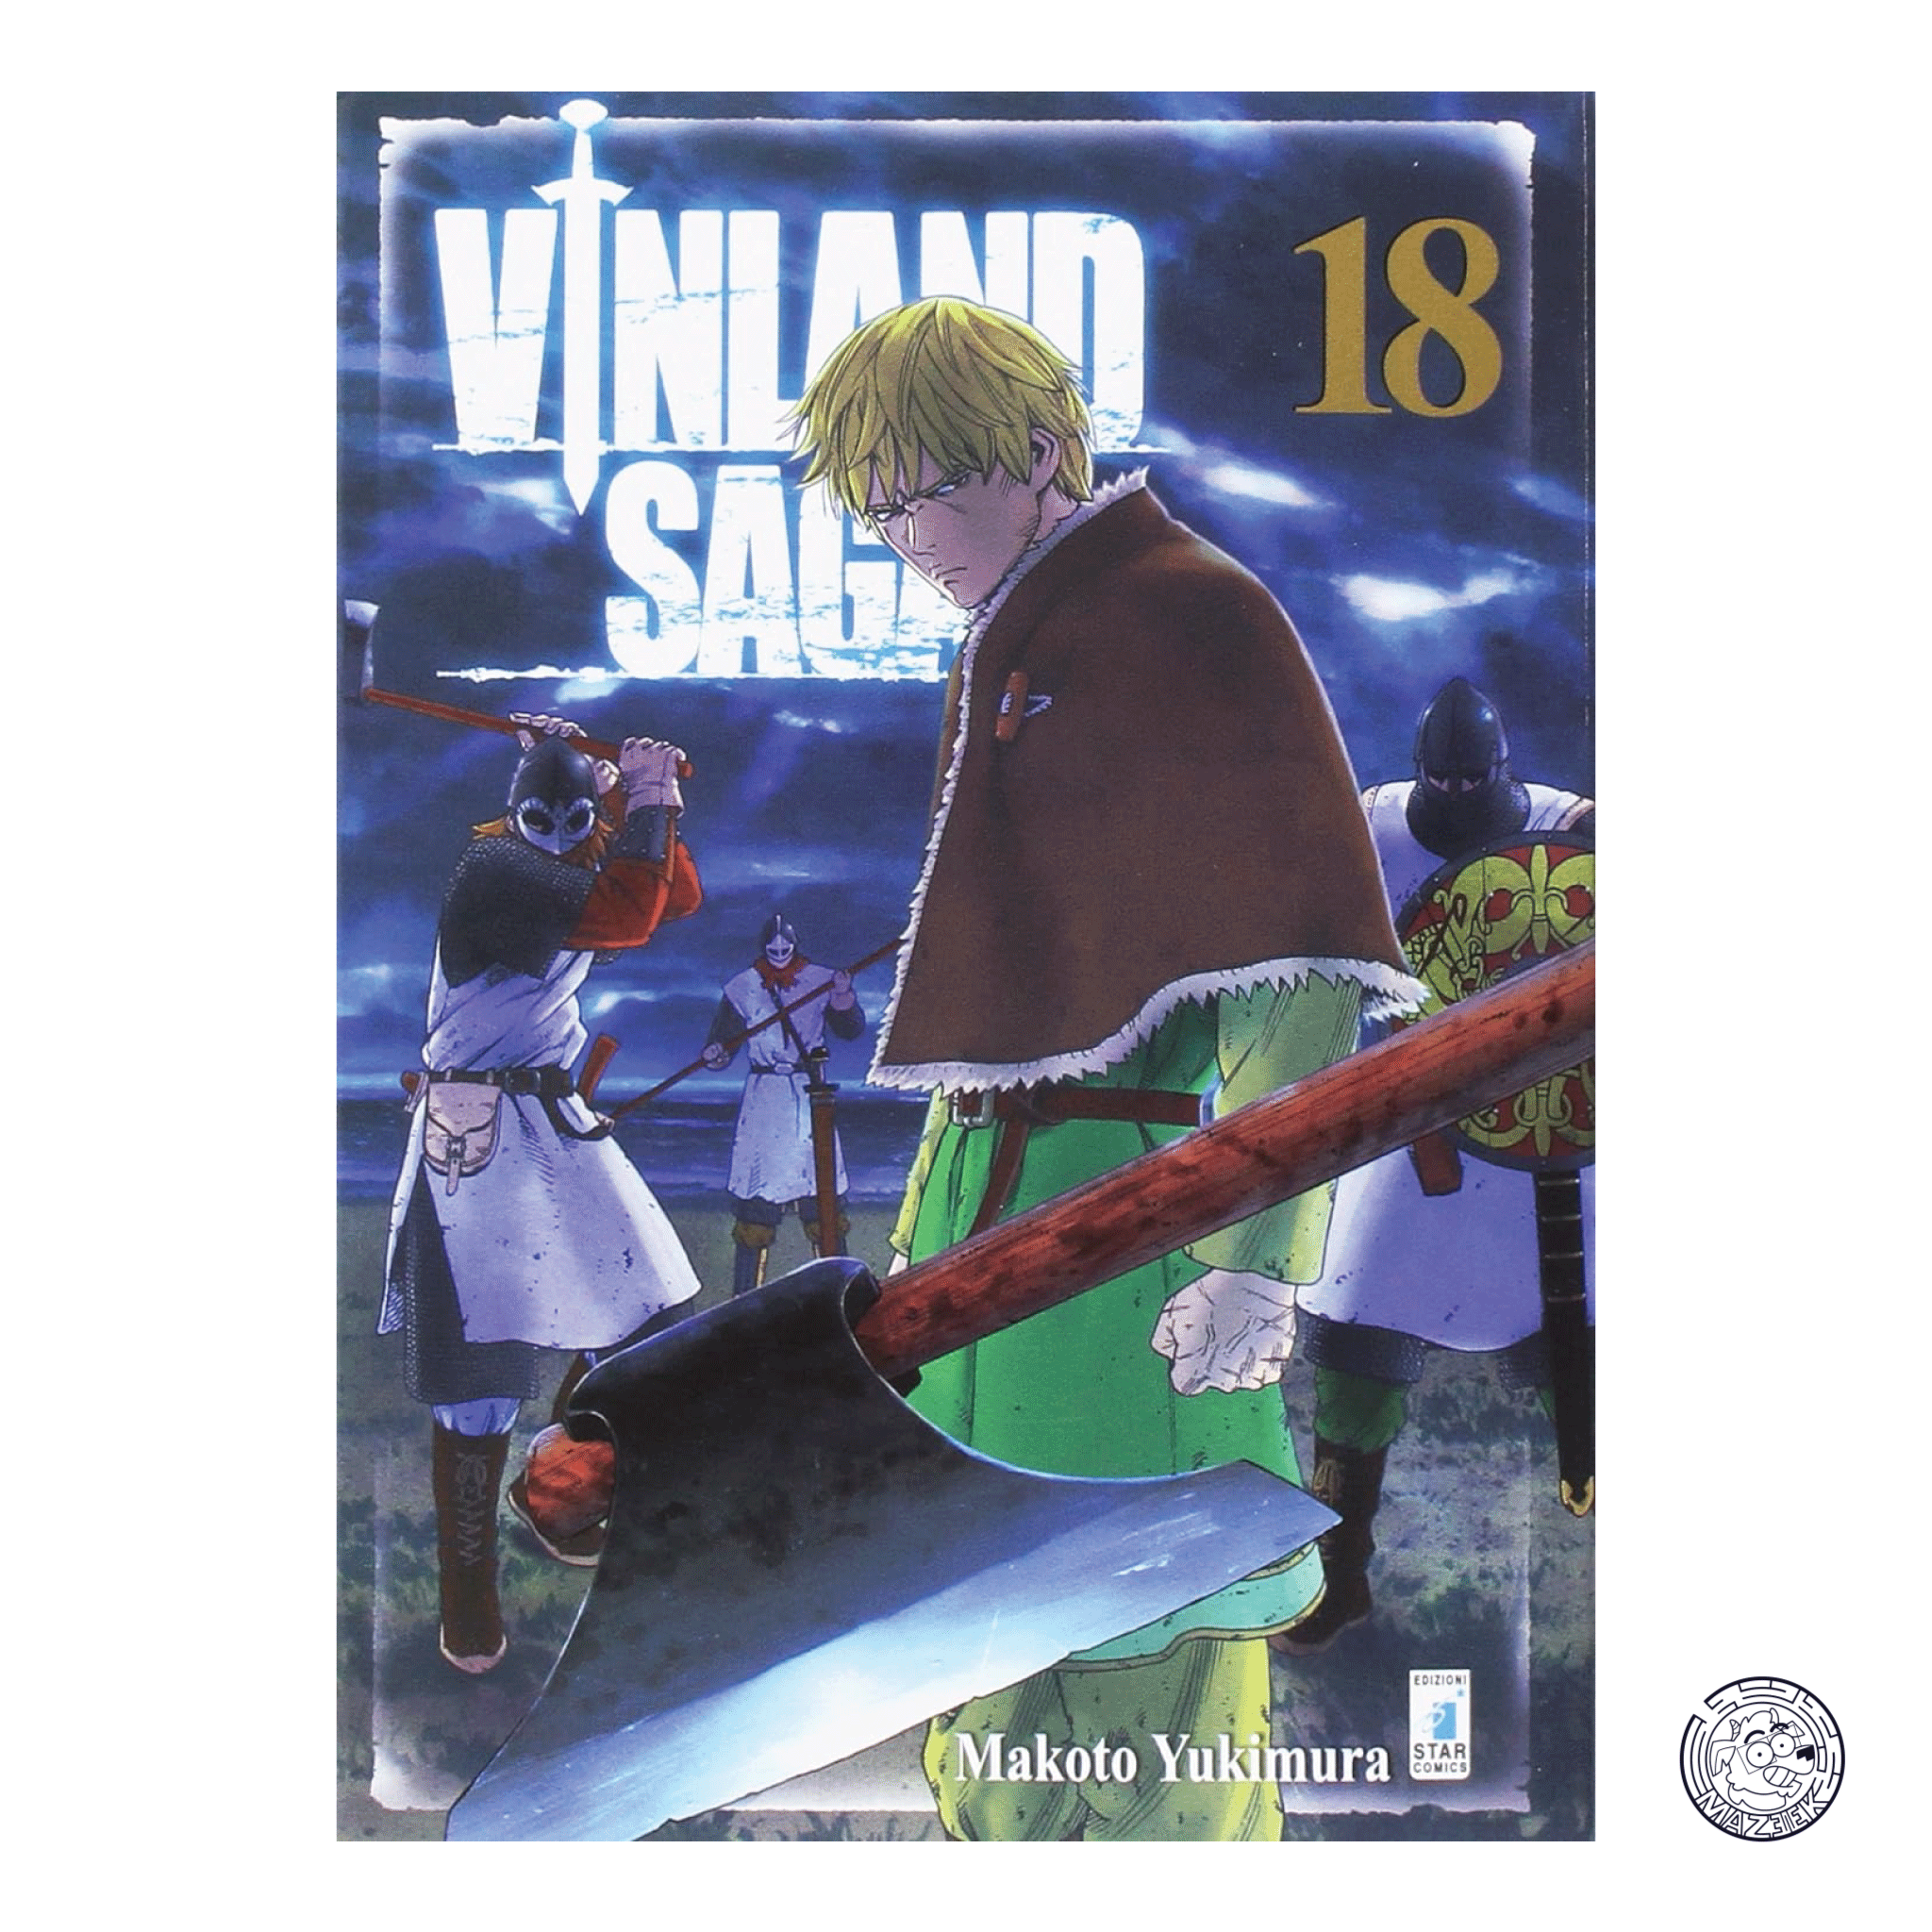 Vinland Saga 18